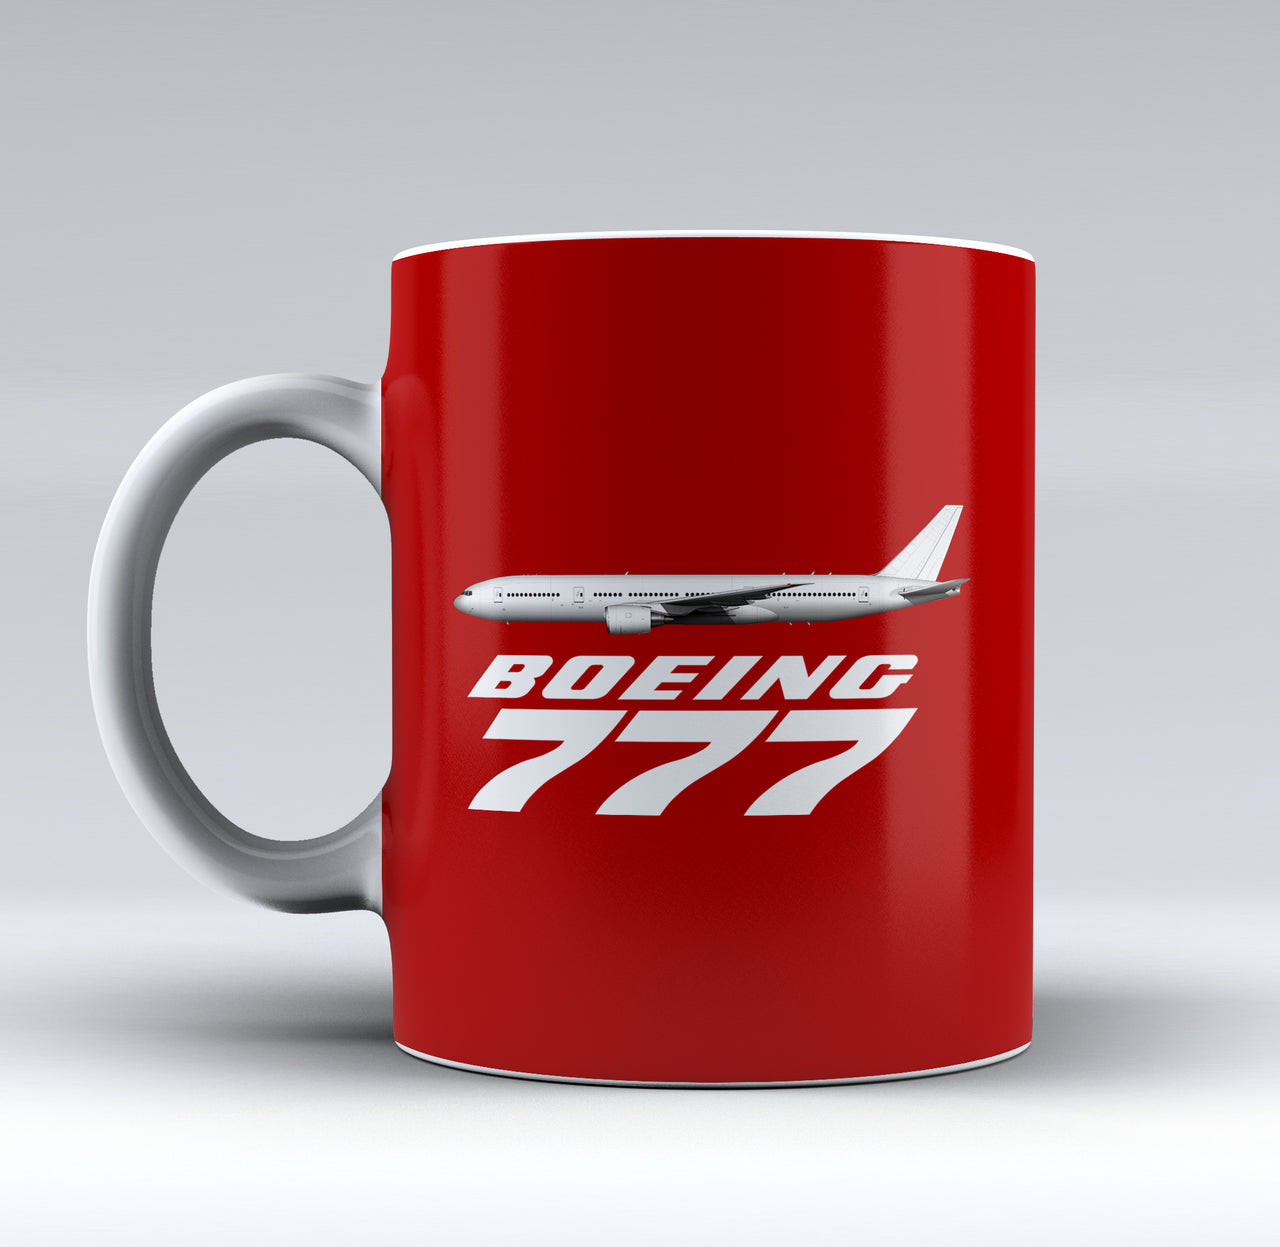 The Boeing 777 Designed Mugs